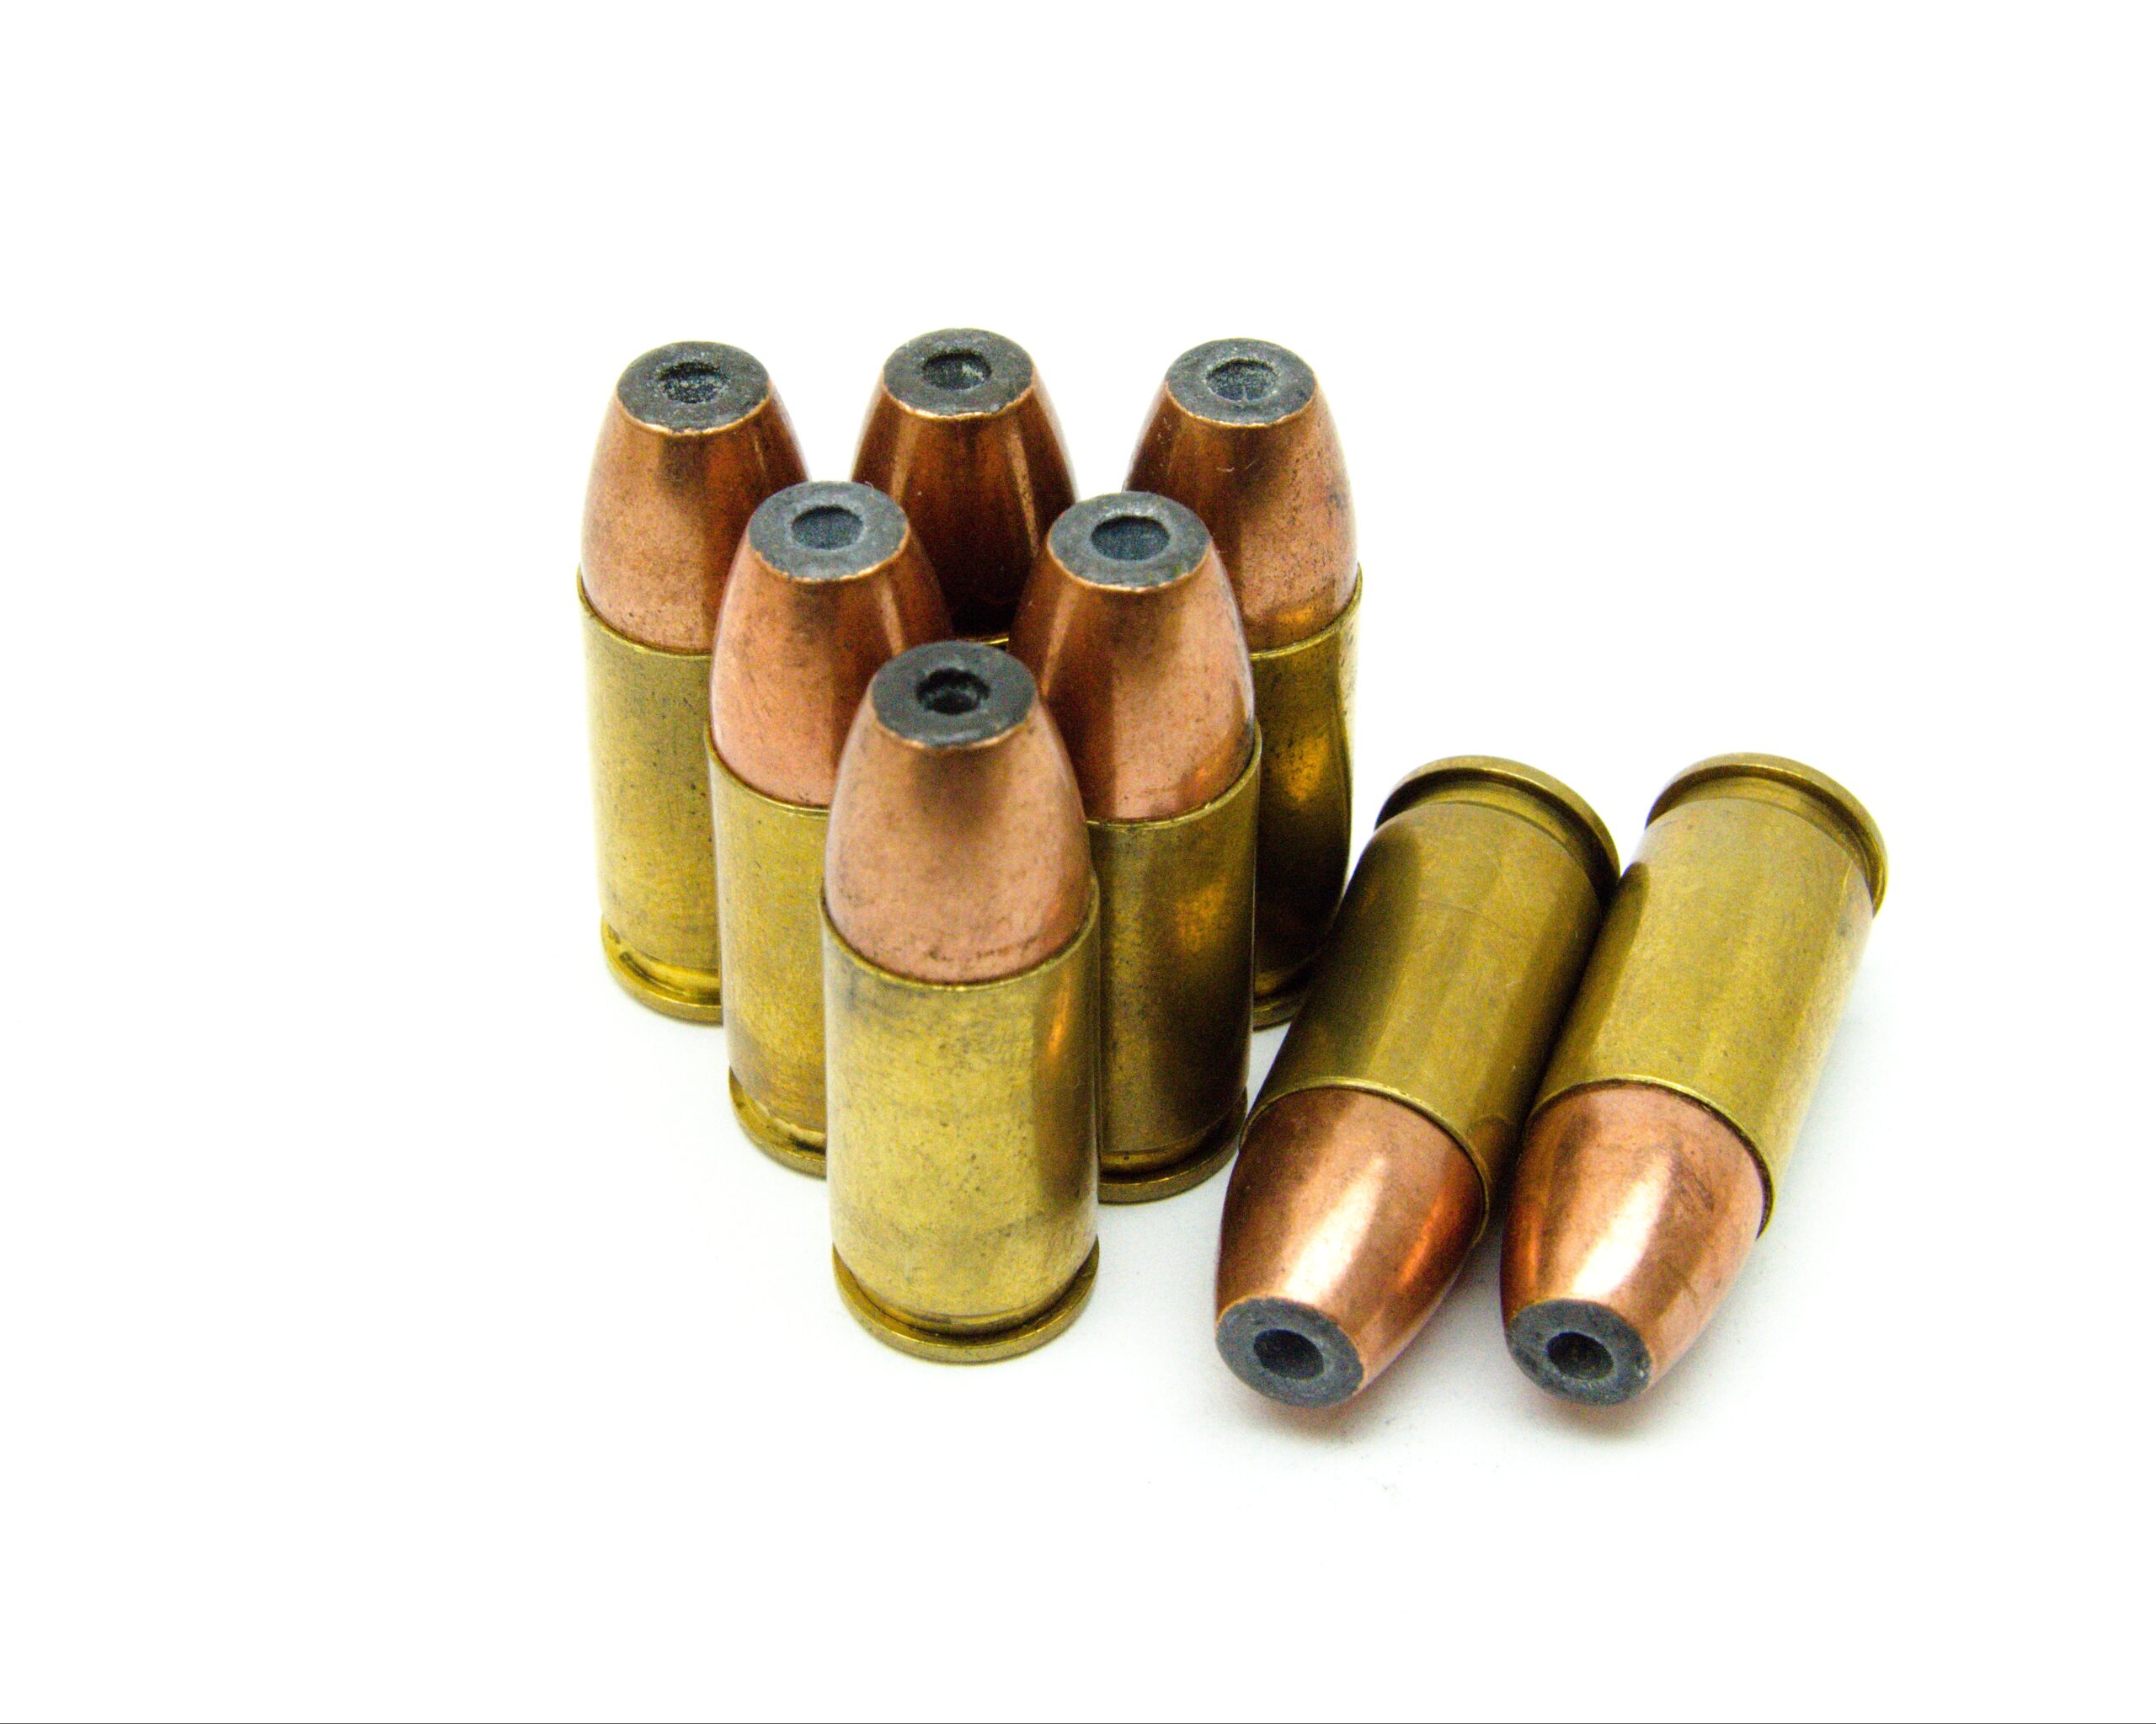 9mm ammunition online